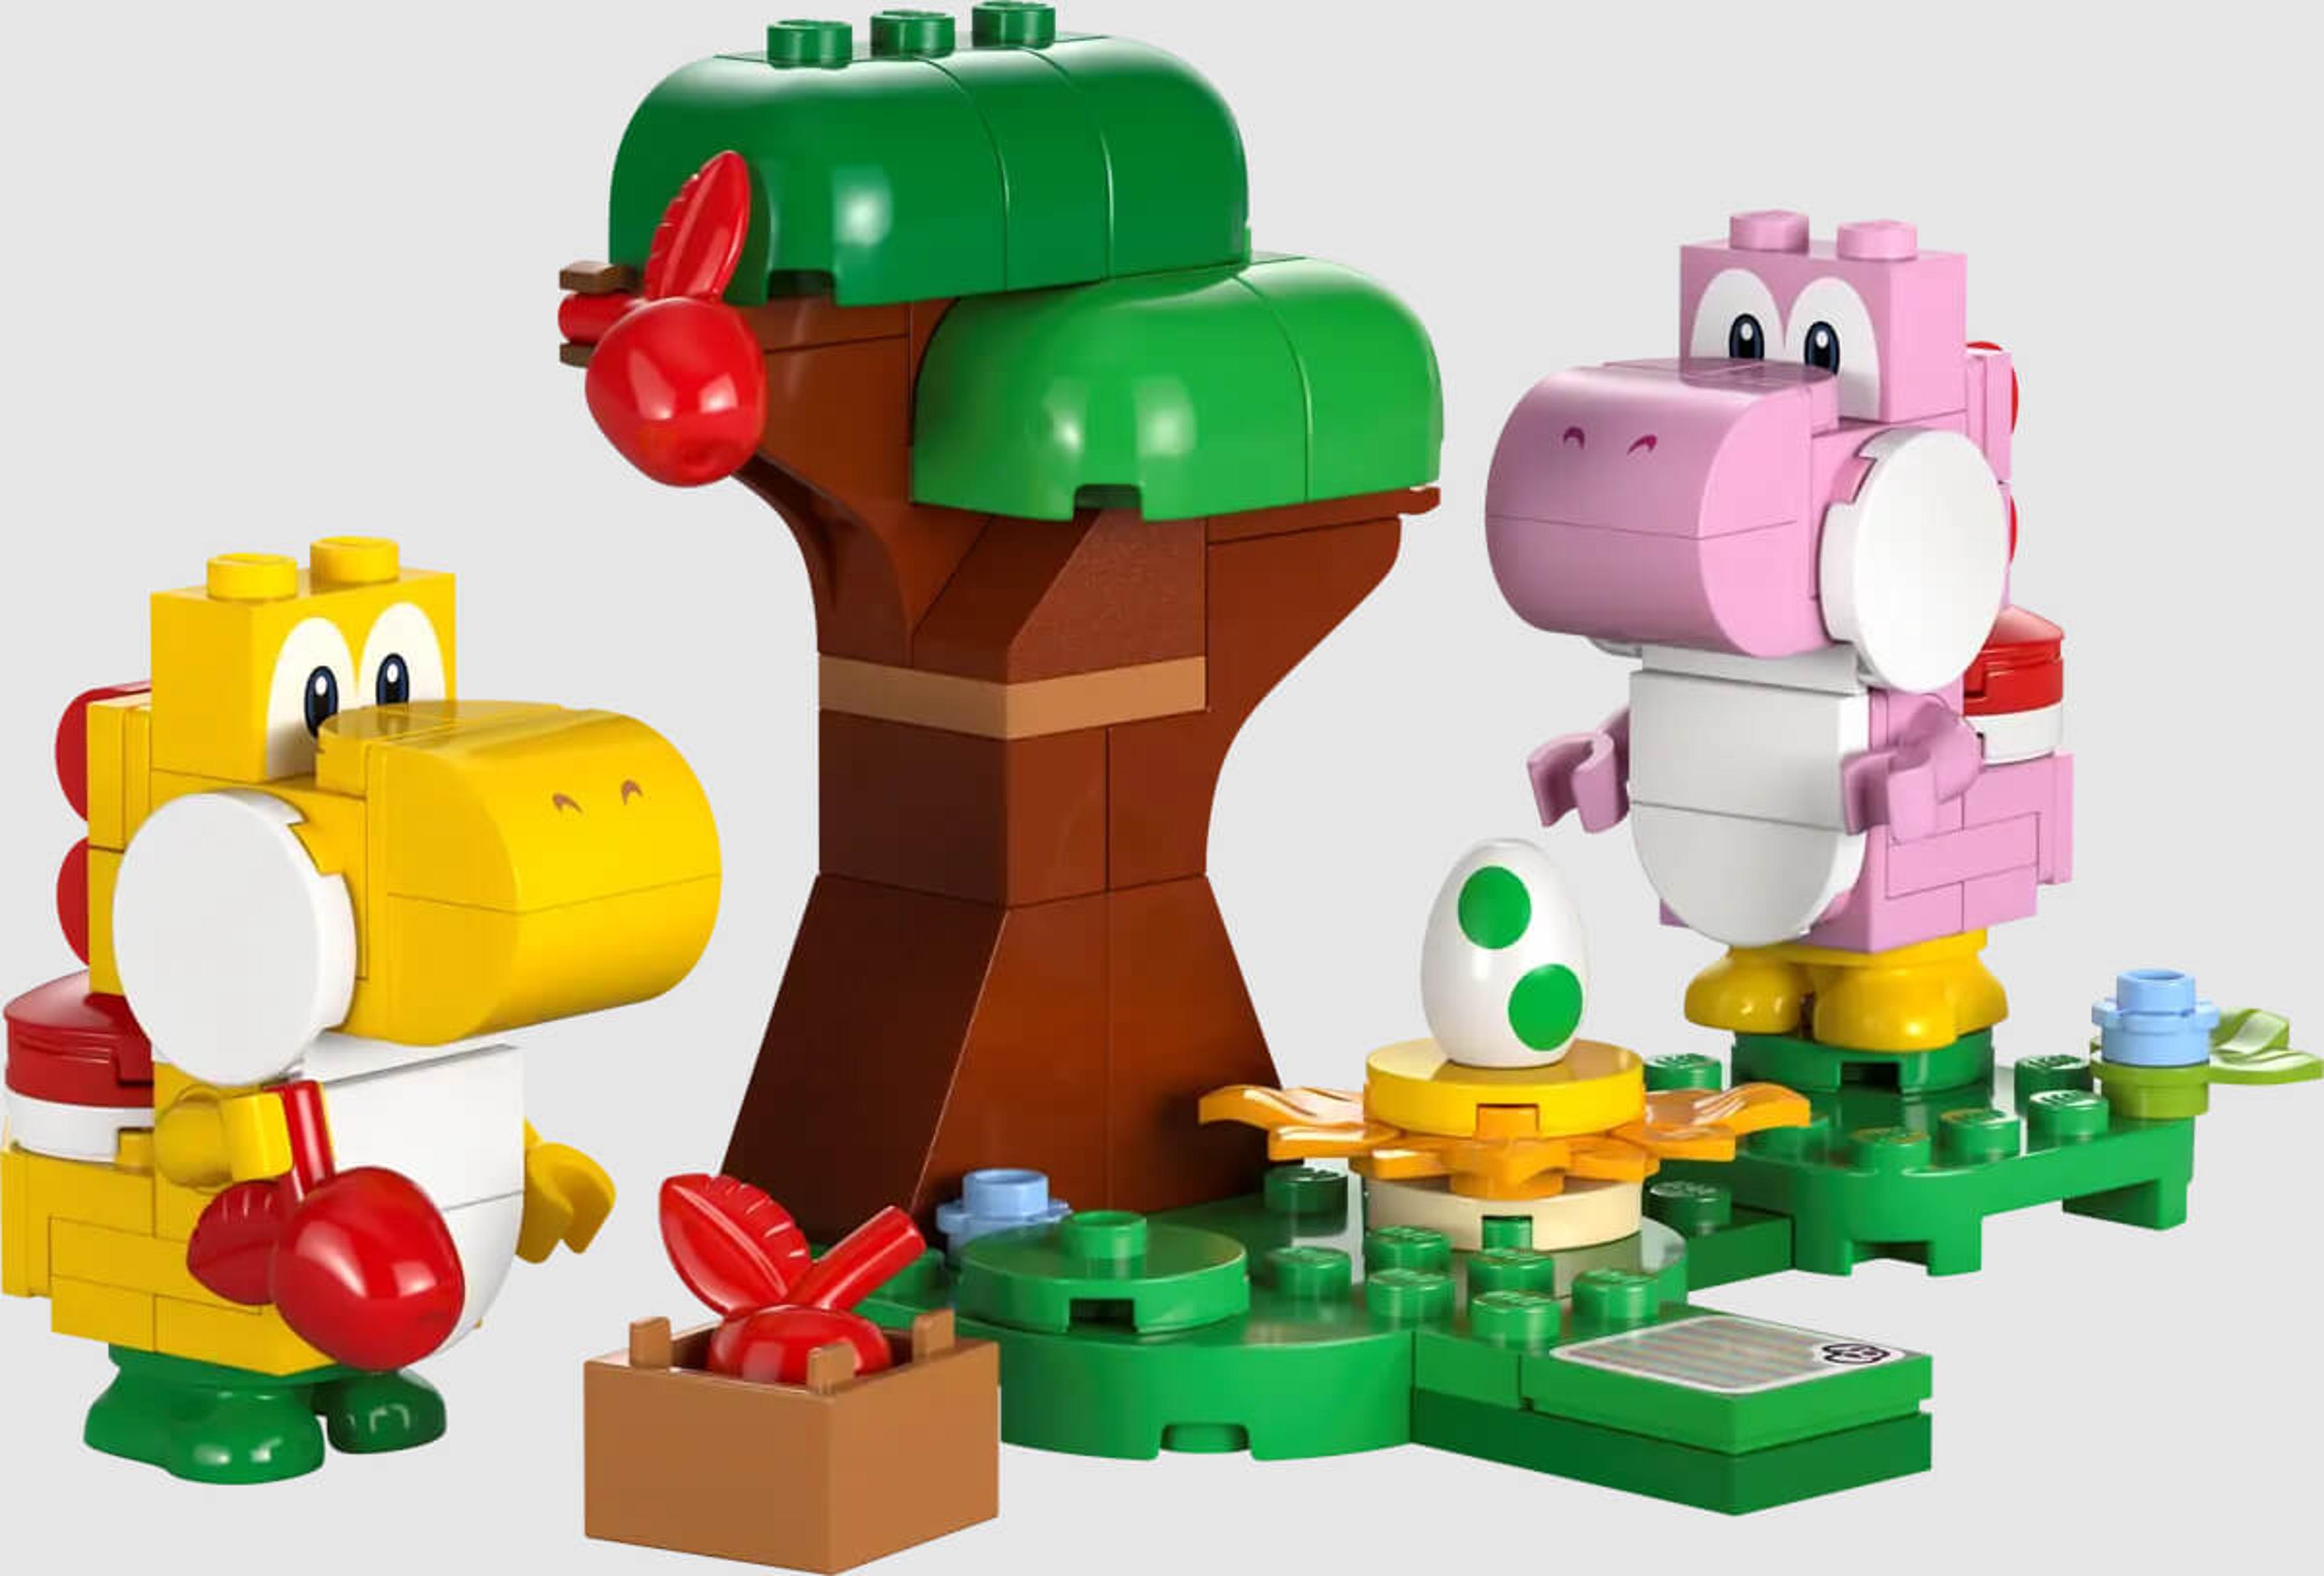 LEGO Super Mario - Yoshis Egg-cellent Forest Expansion Set